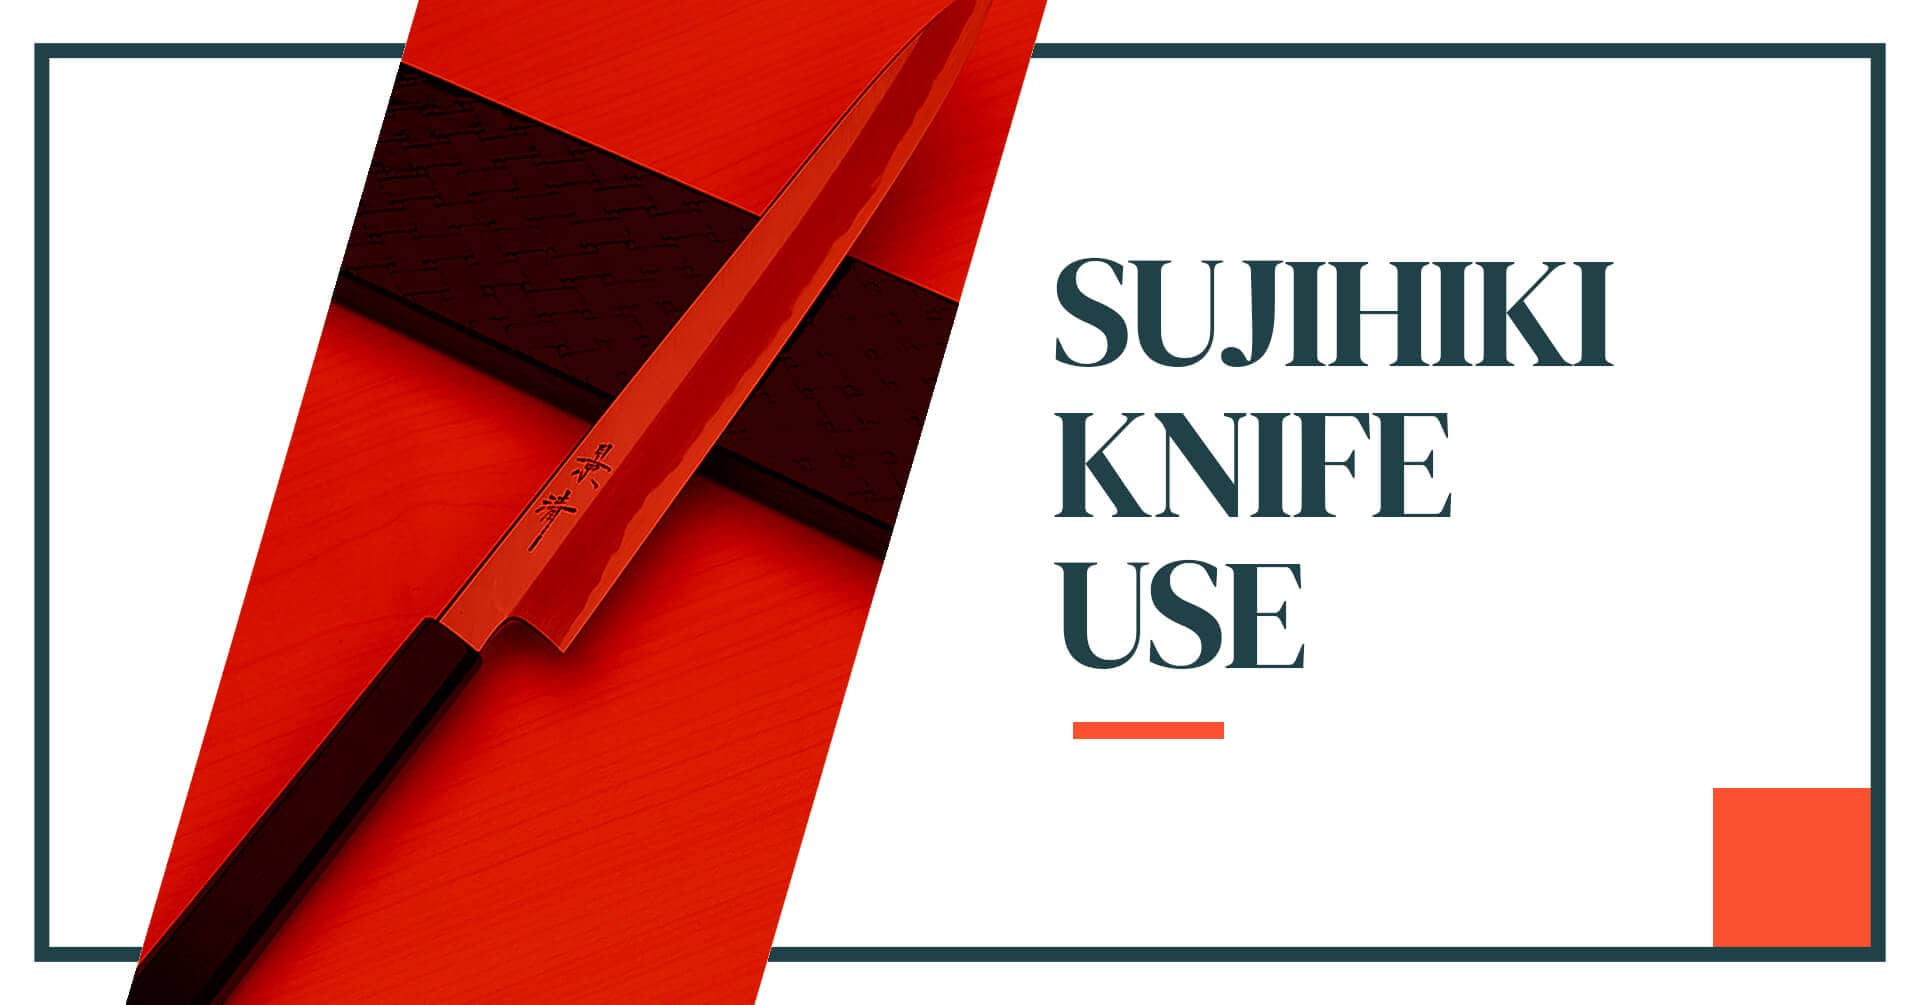 Sujihiki Knife Use